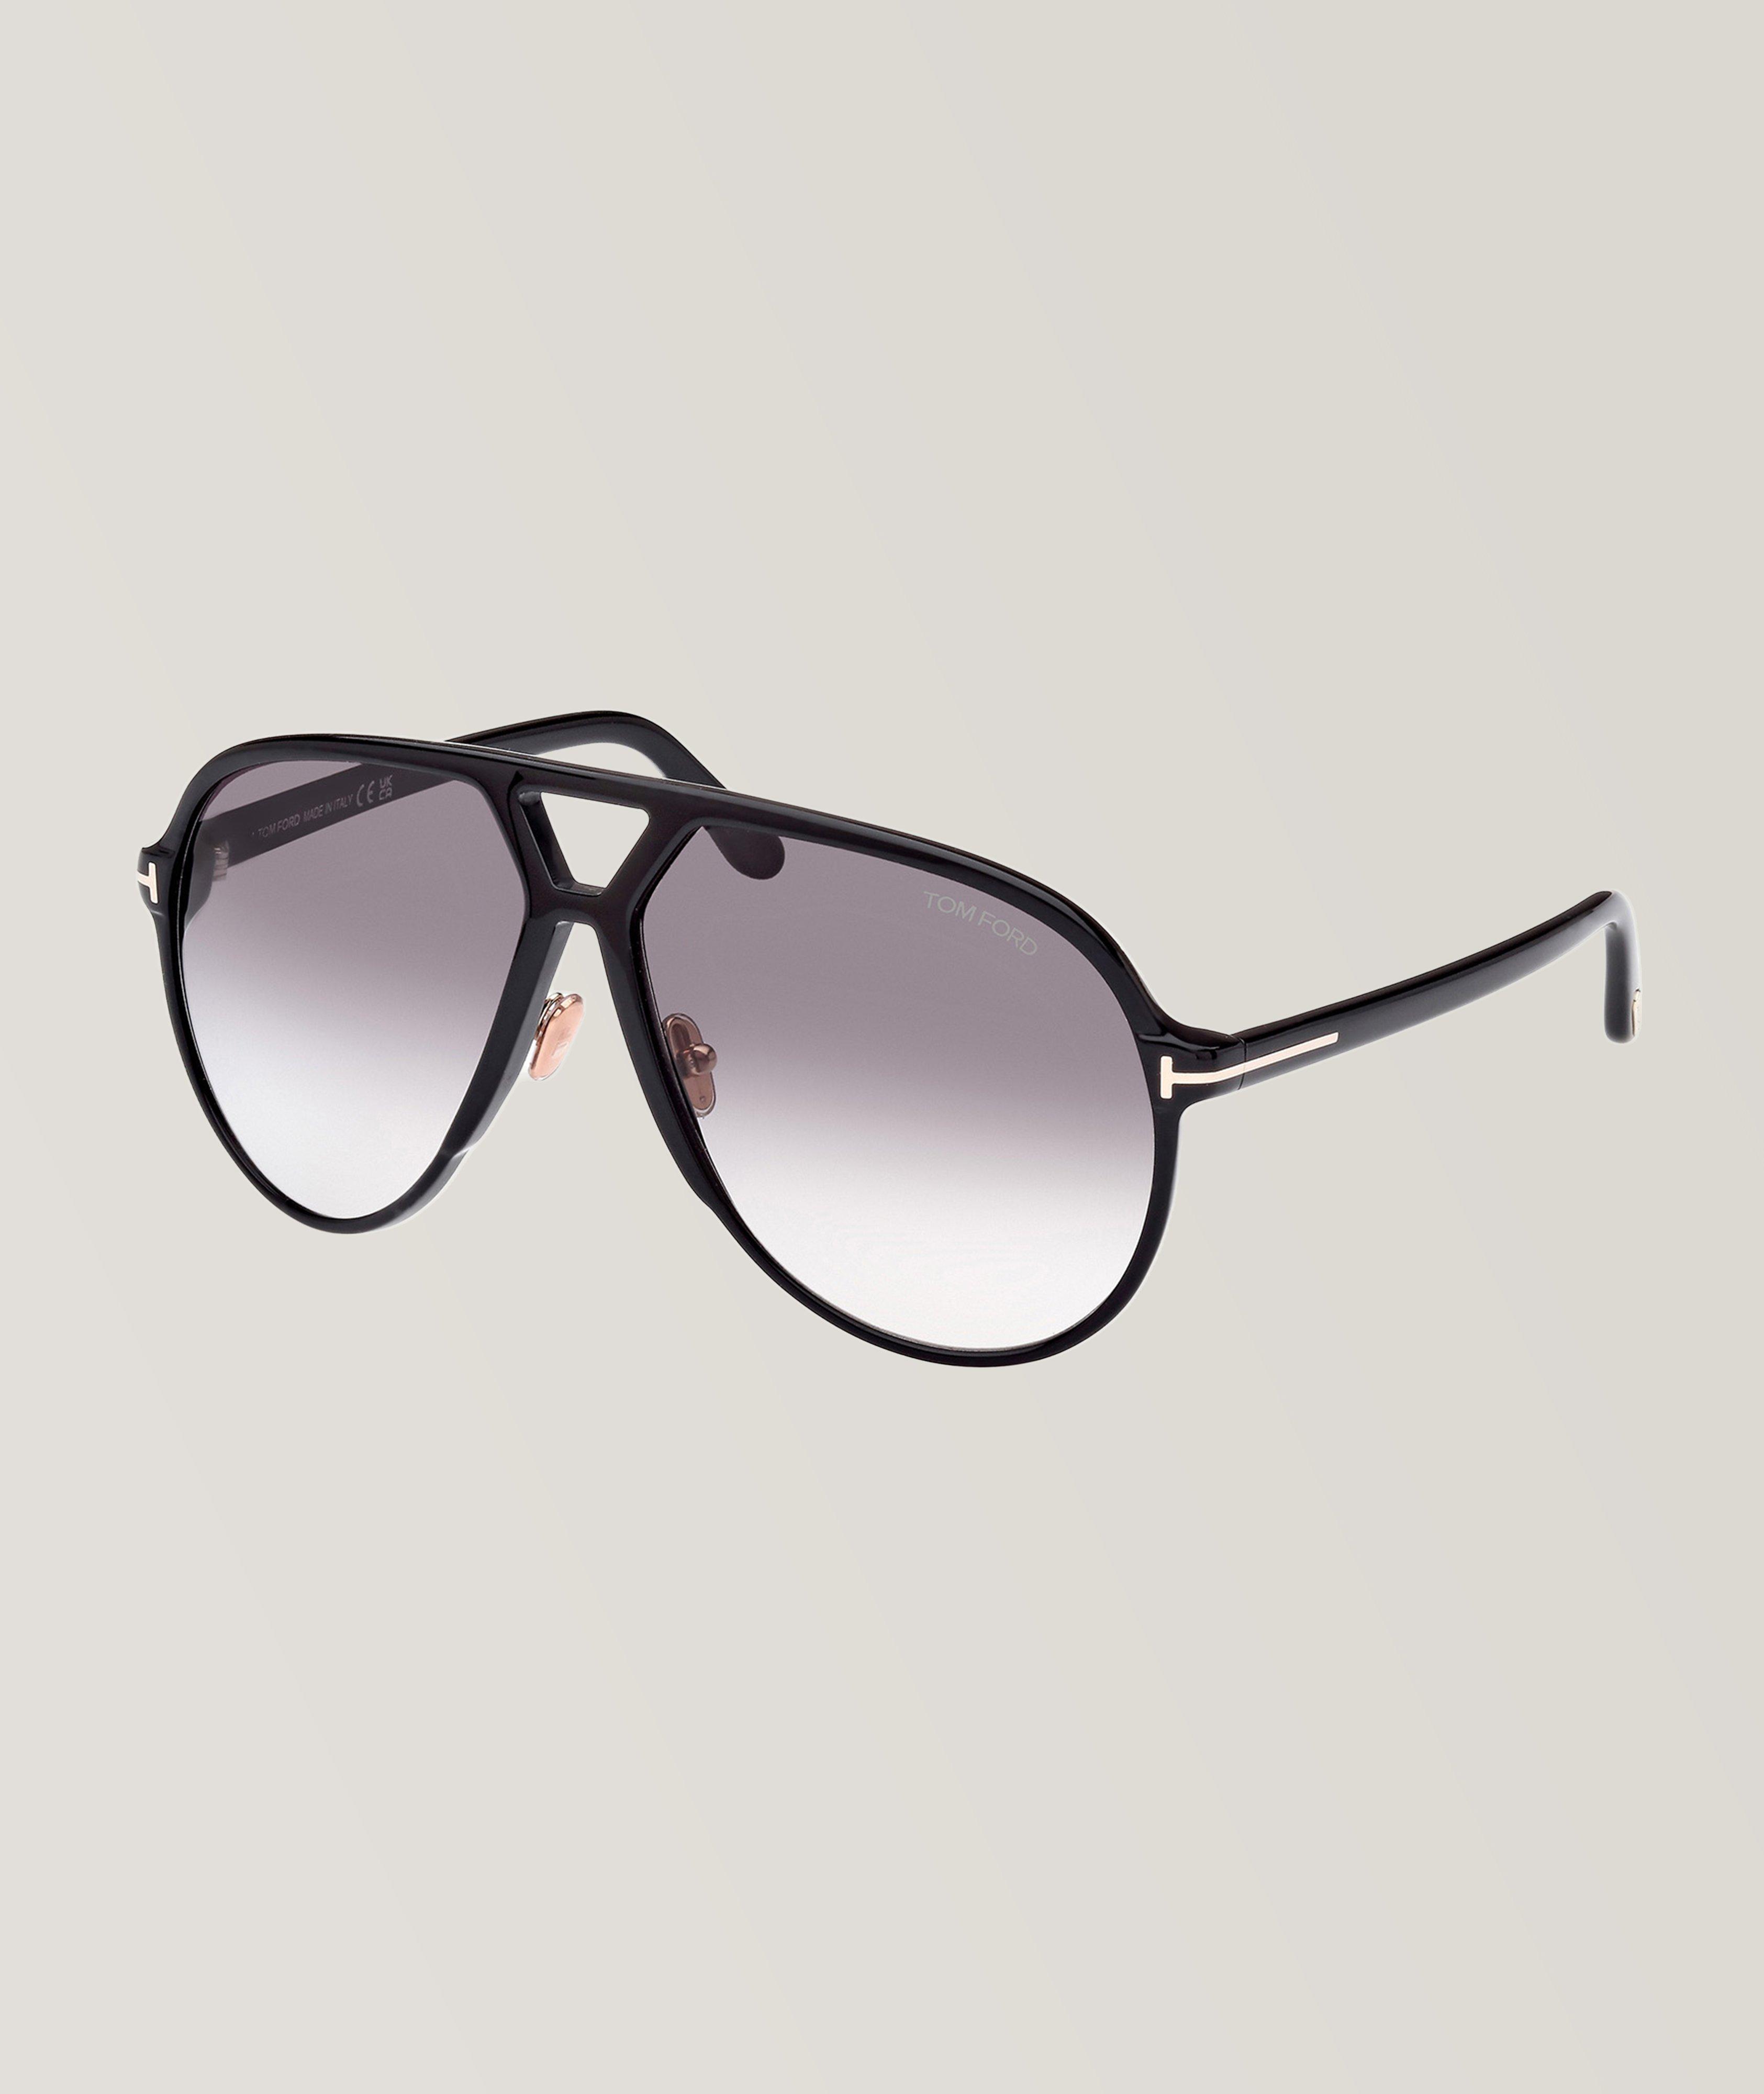 Bertrand Aviator Sunglasses image 0